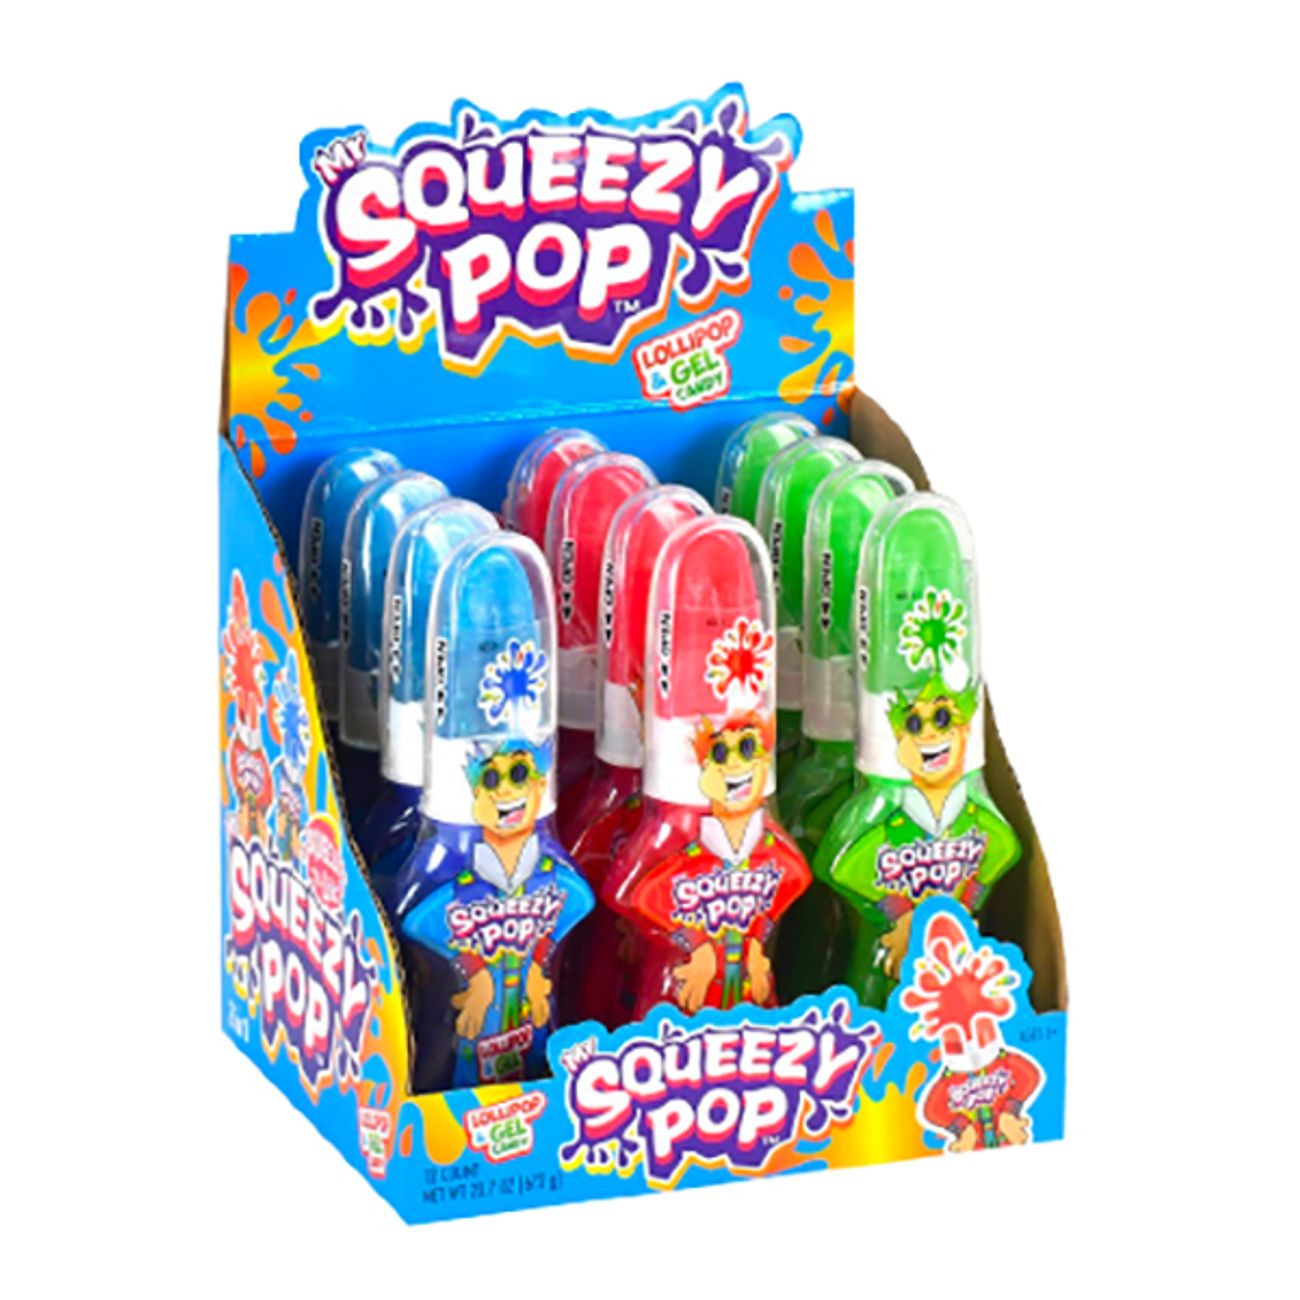 Mr squeezy pop